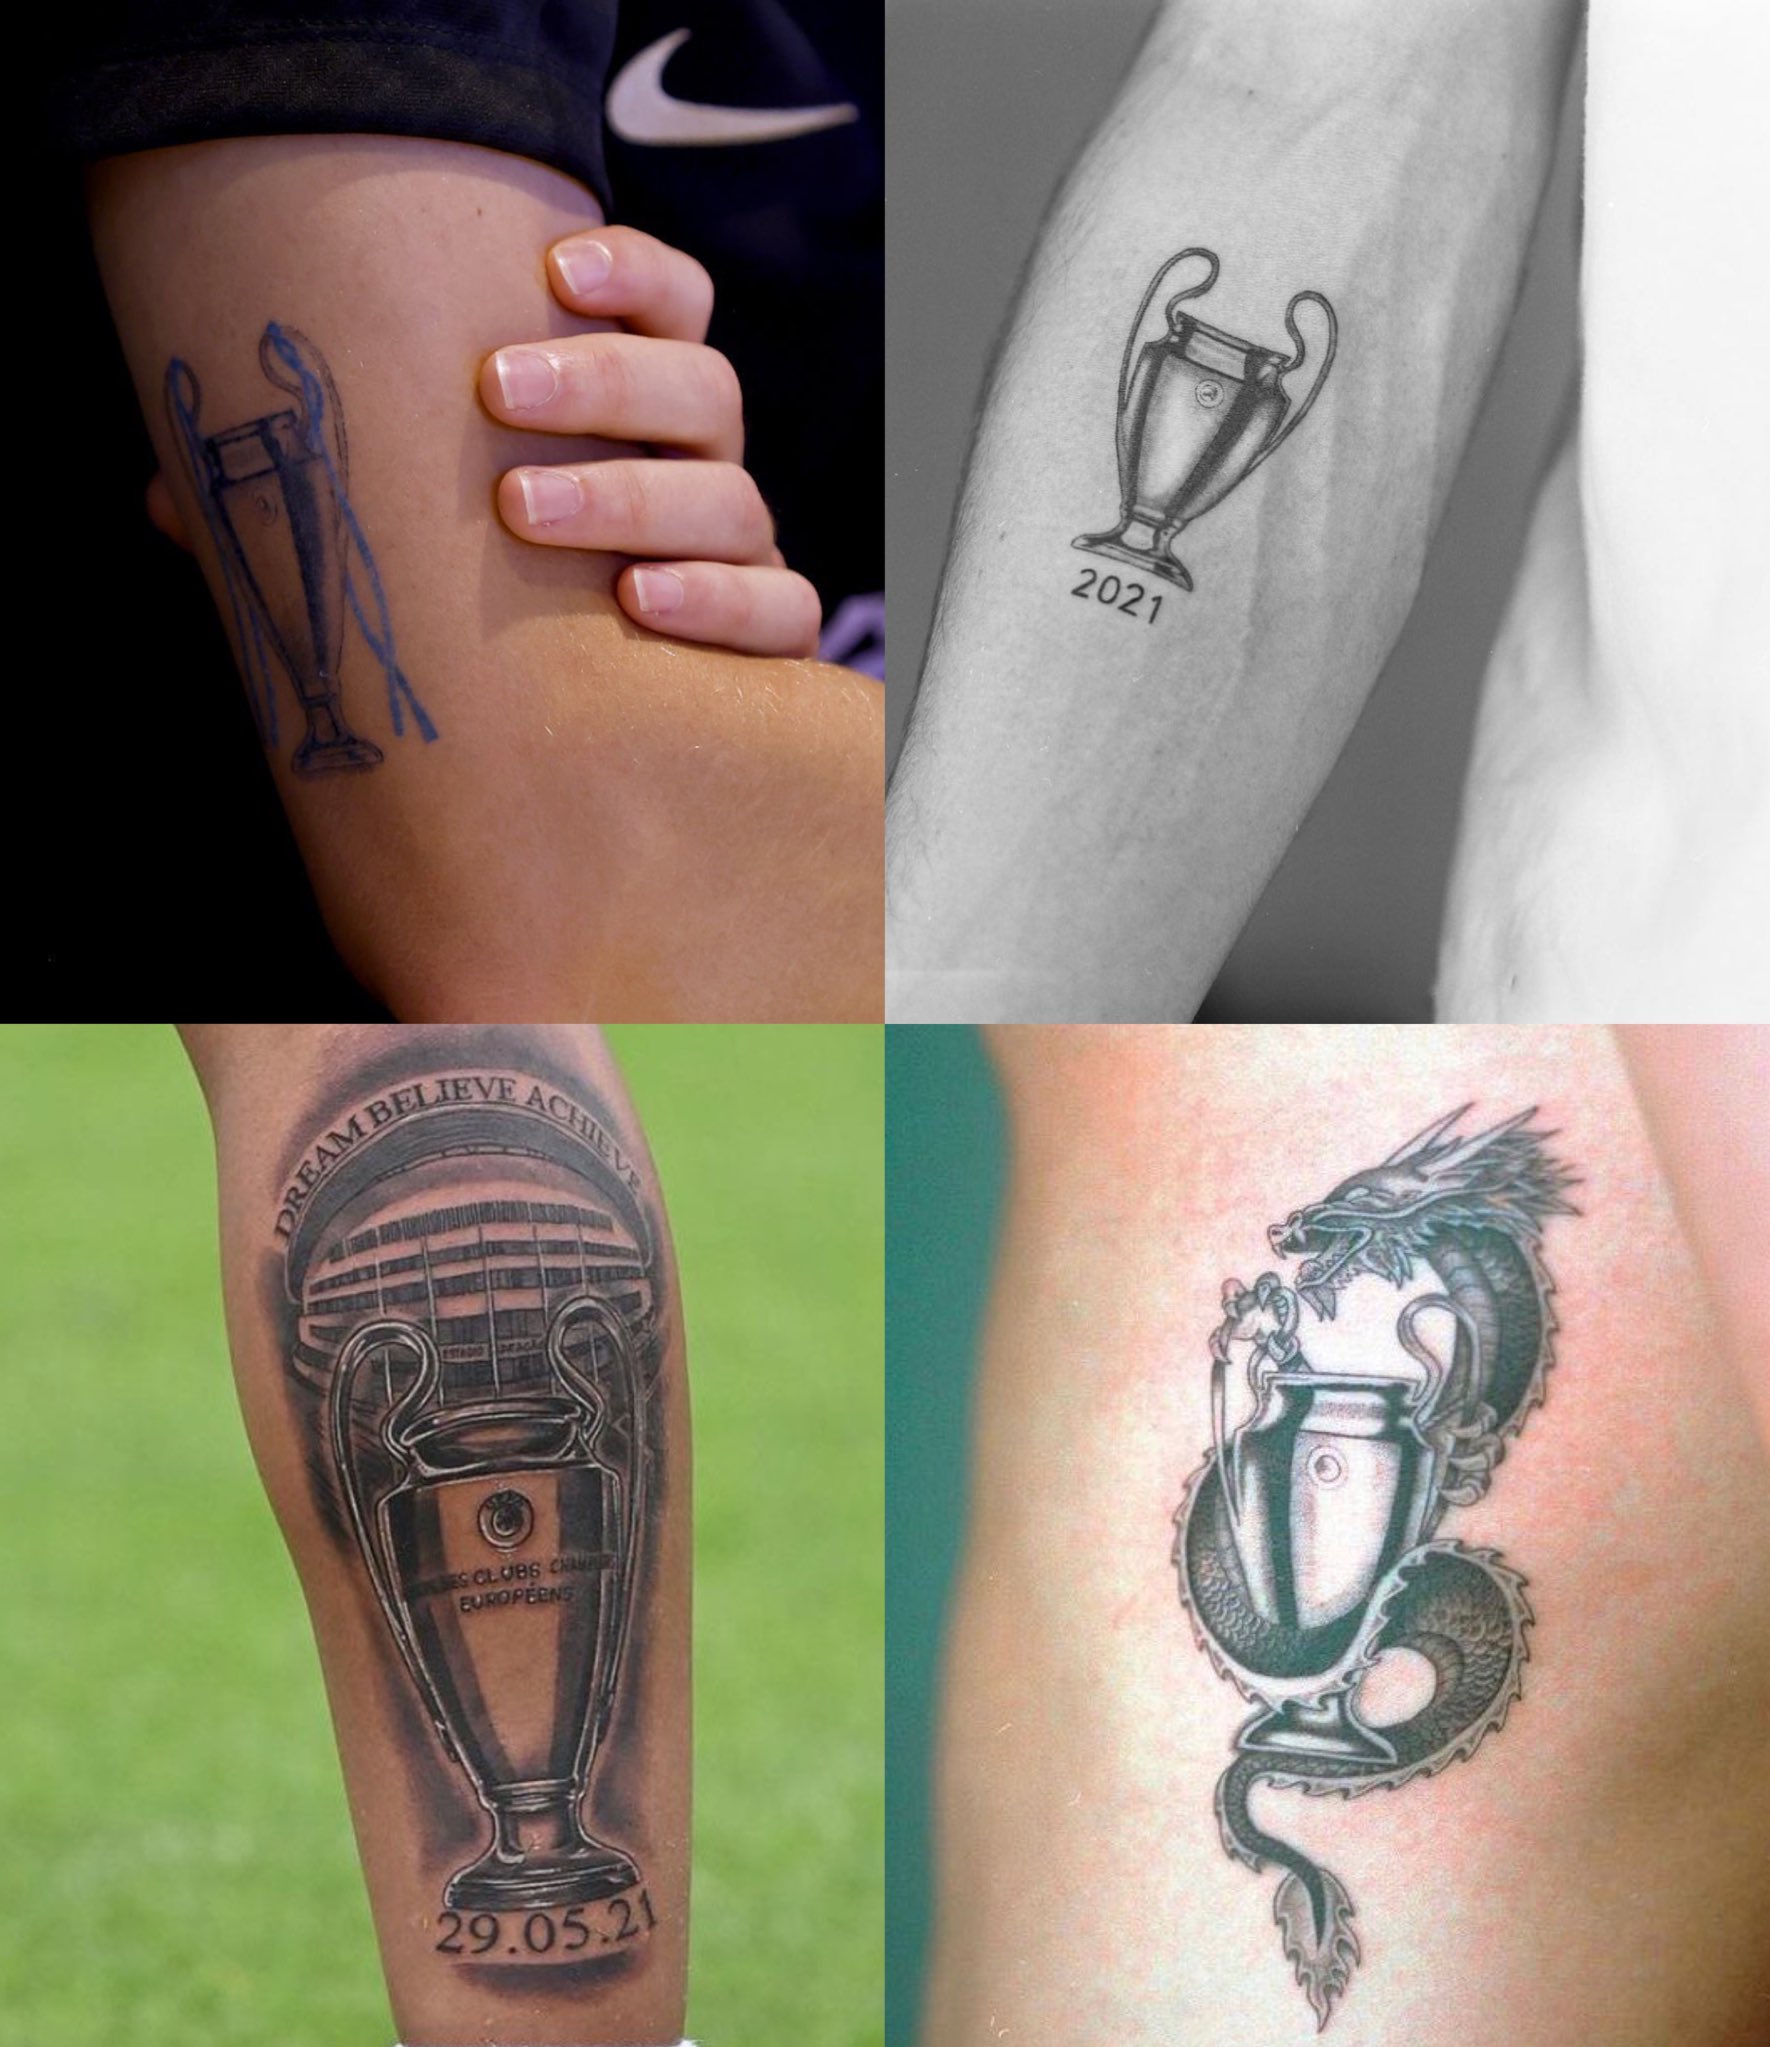 Man City fan's Champions League winners tattoo still wrong - Yahoo Sports